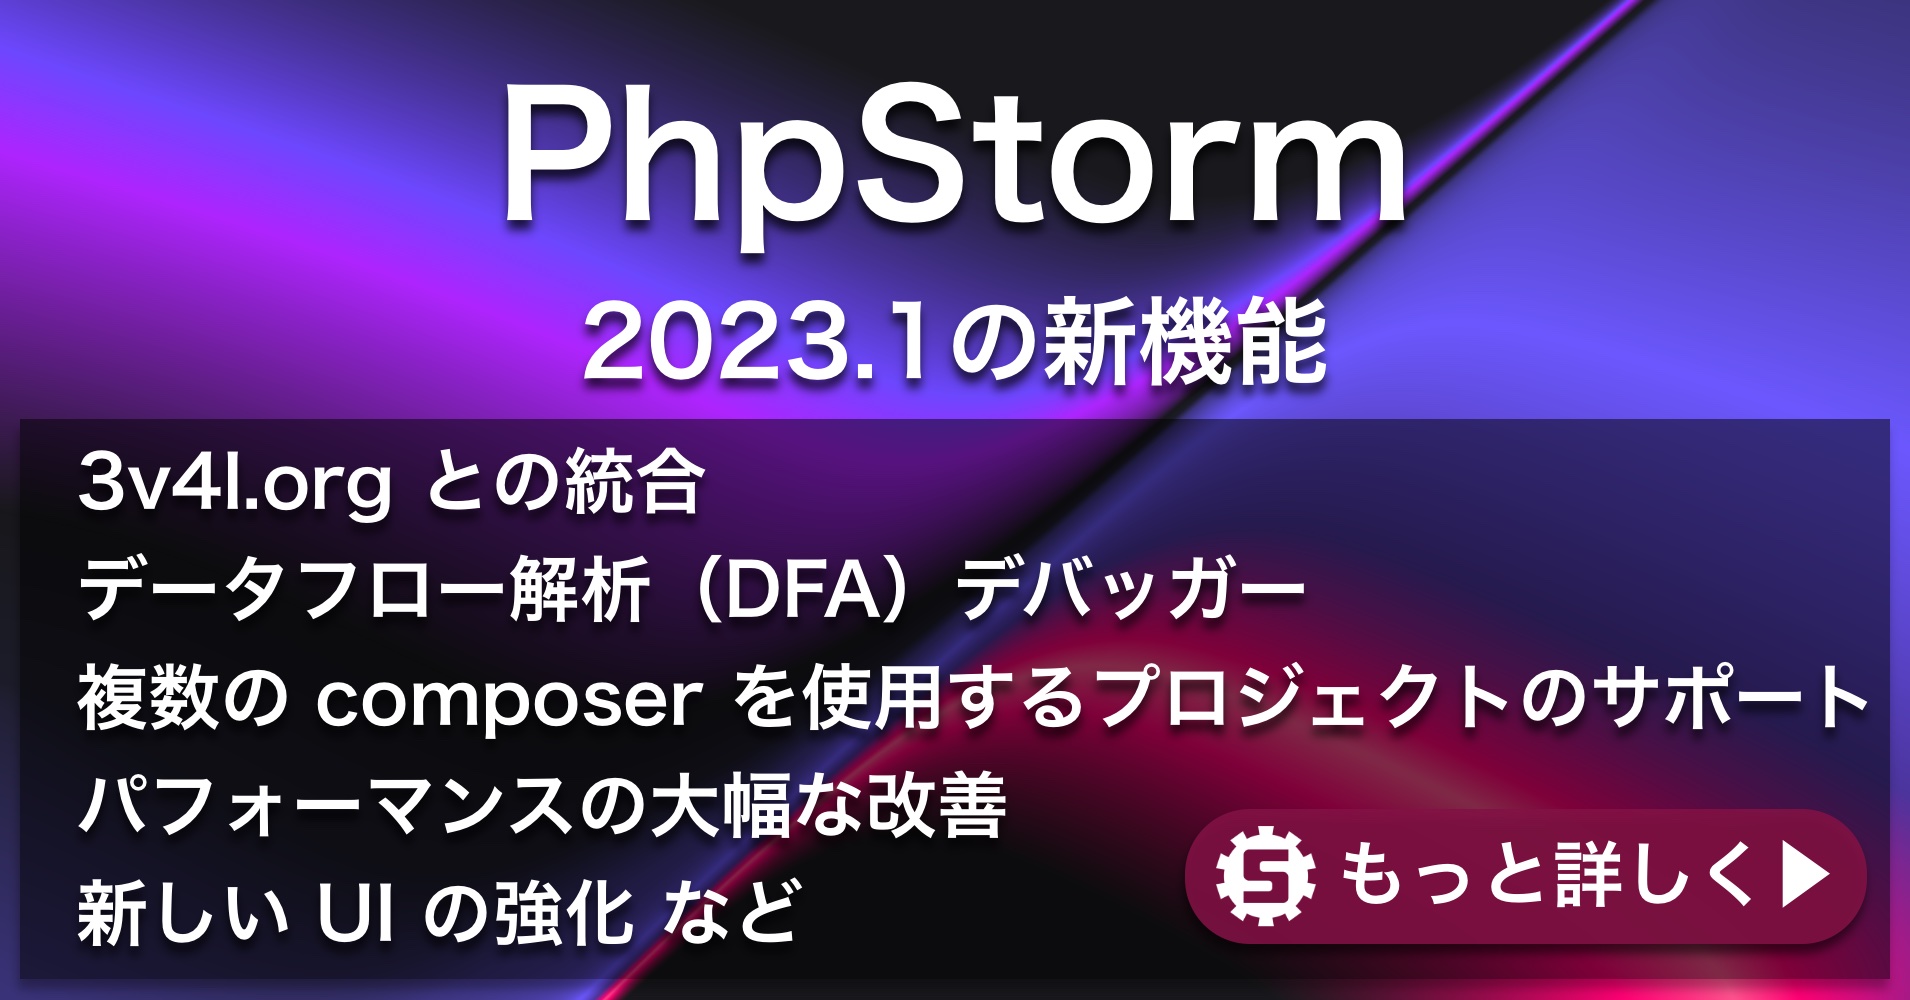 PhpStorm 2023.1の新機能